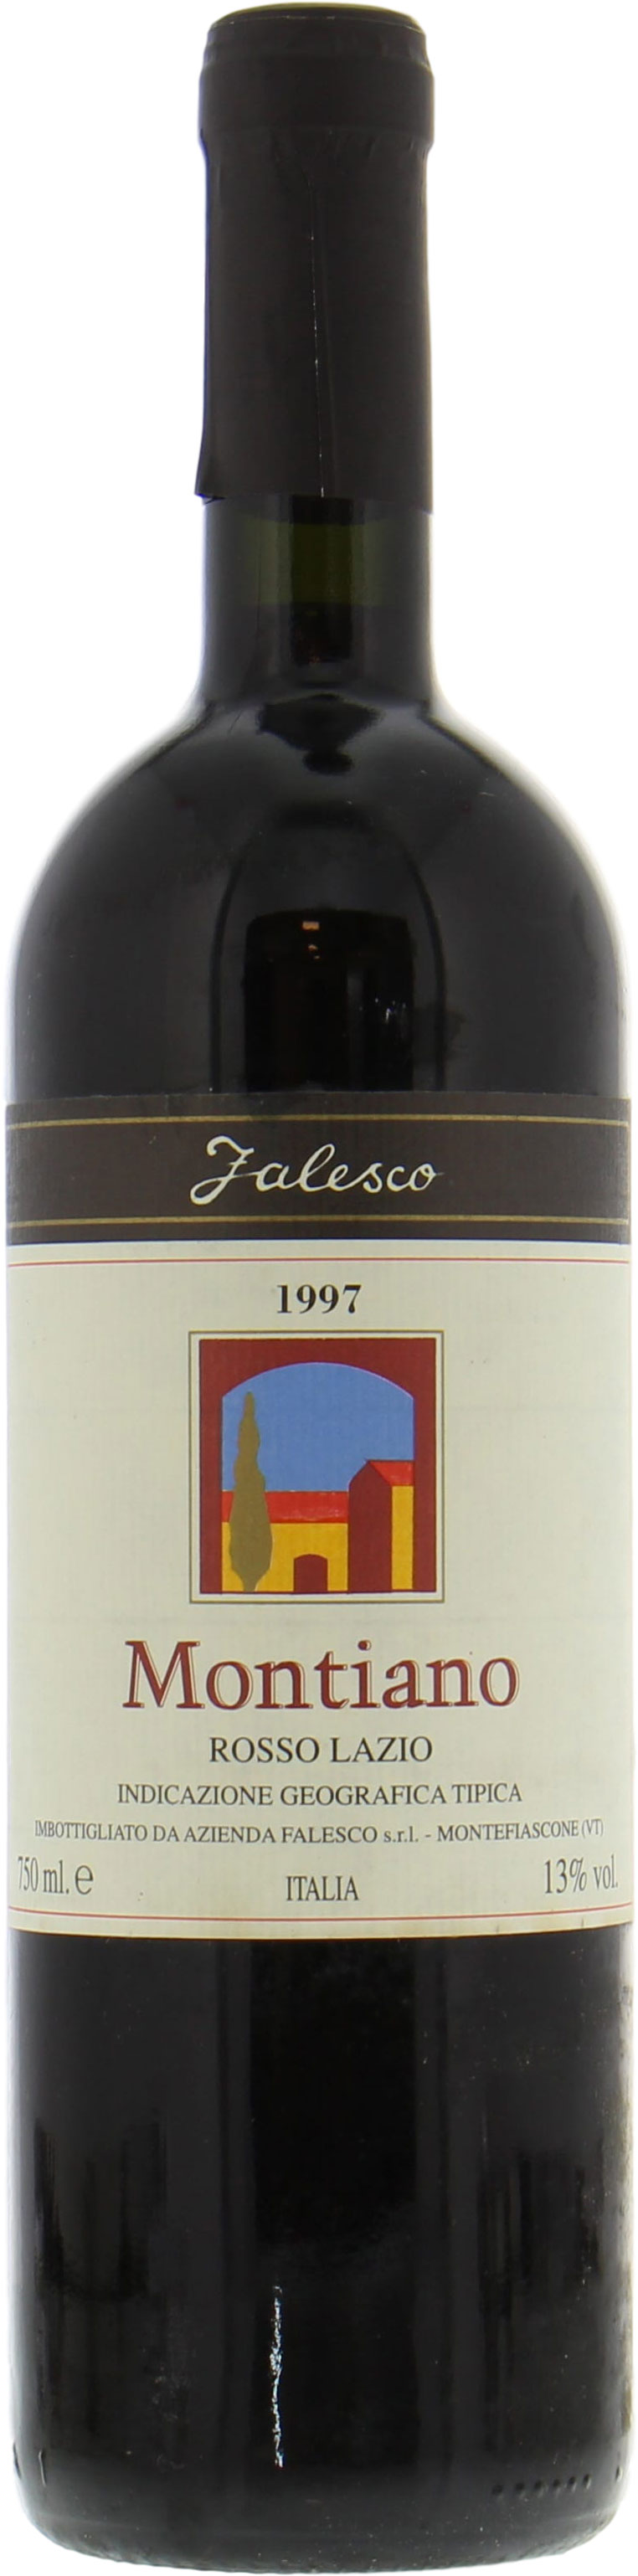 Falesco - Montiano 1997 Perfect